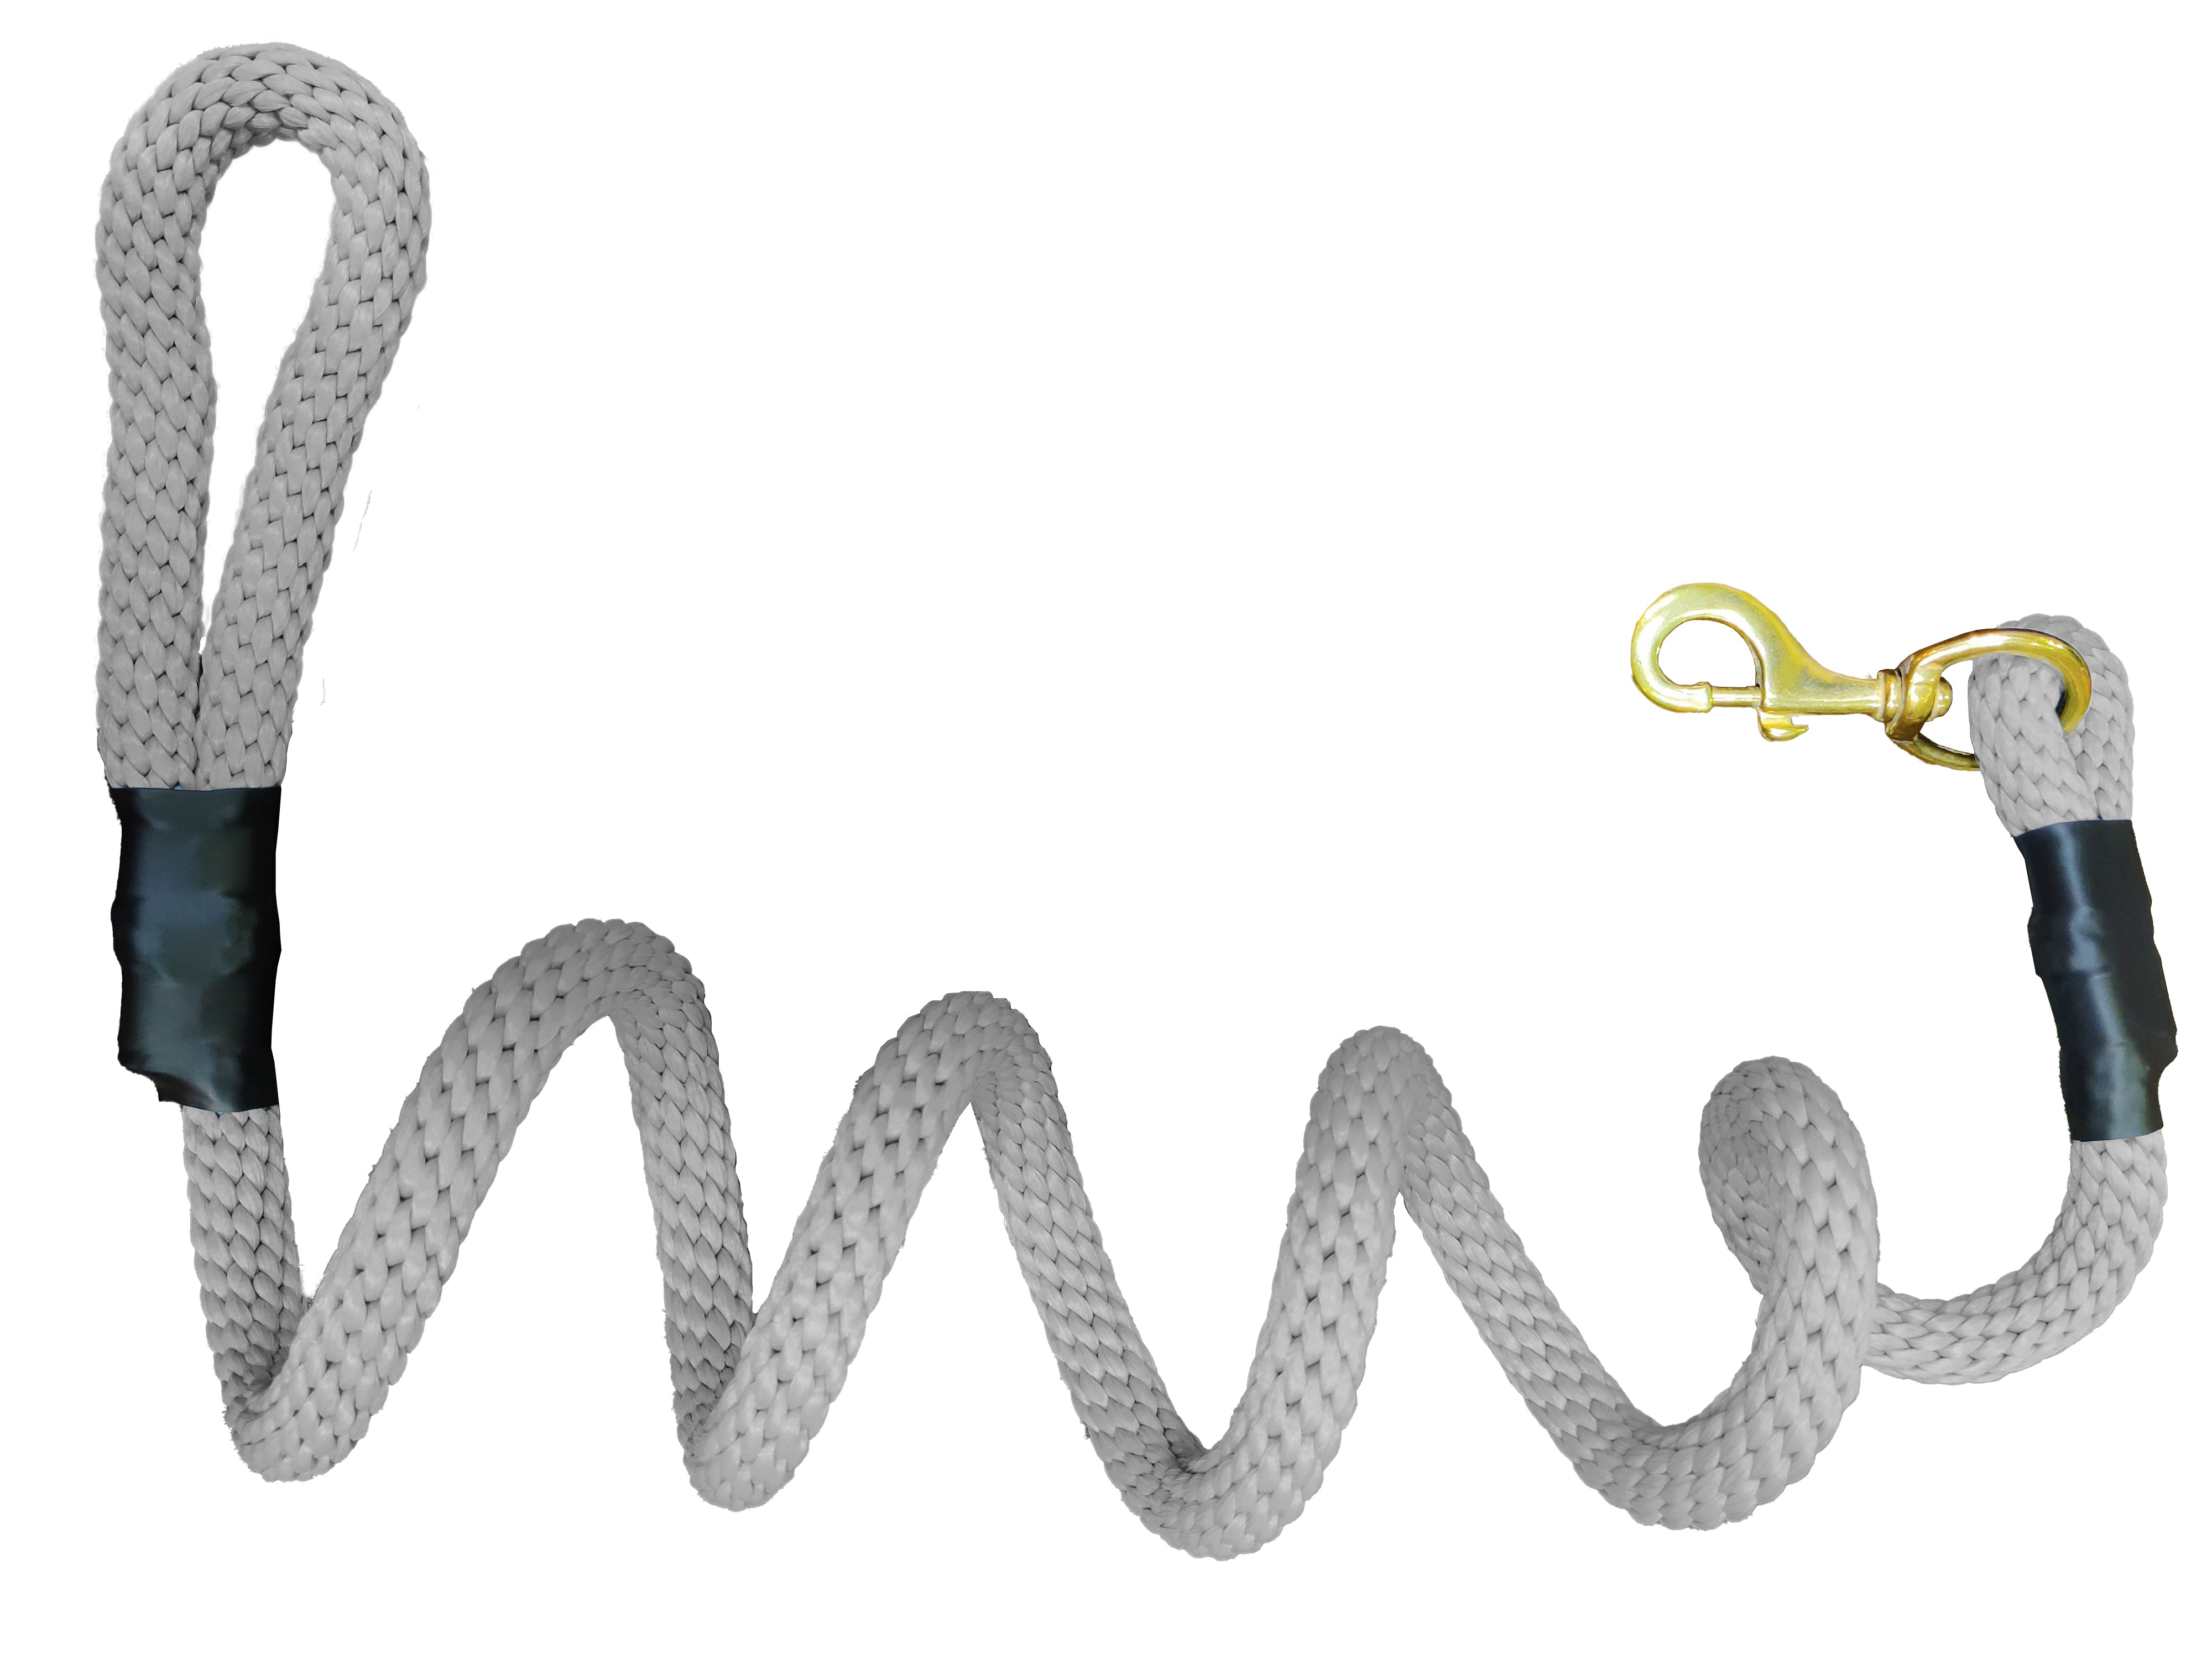 18mm grey nylon dog leash with brass hook